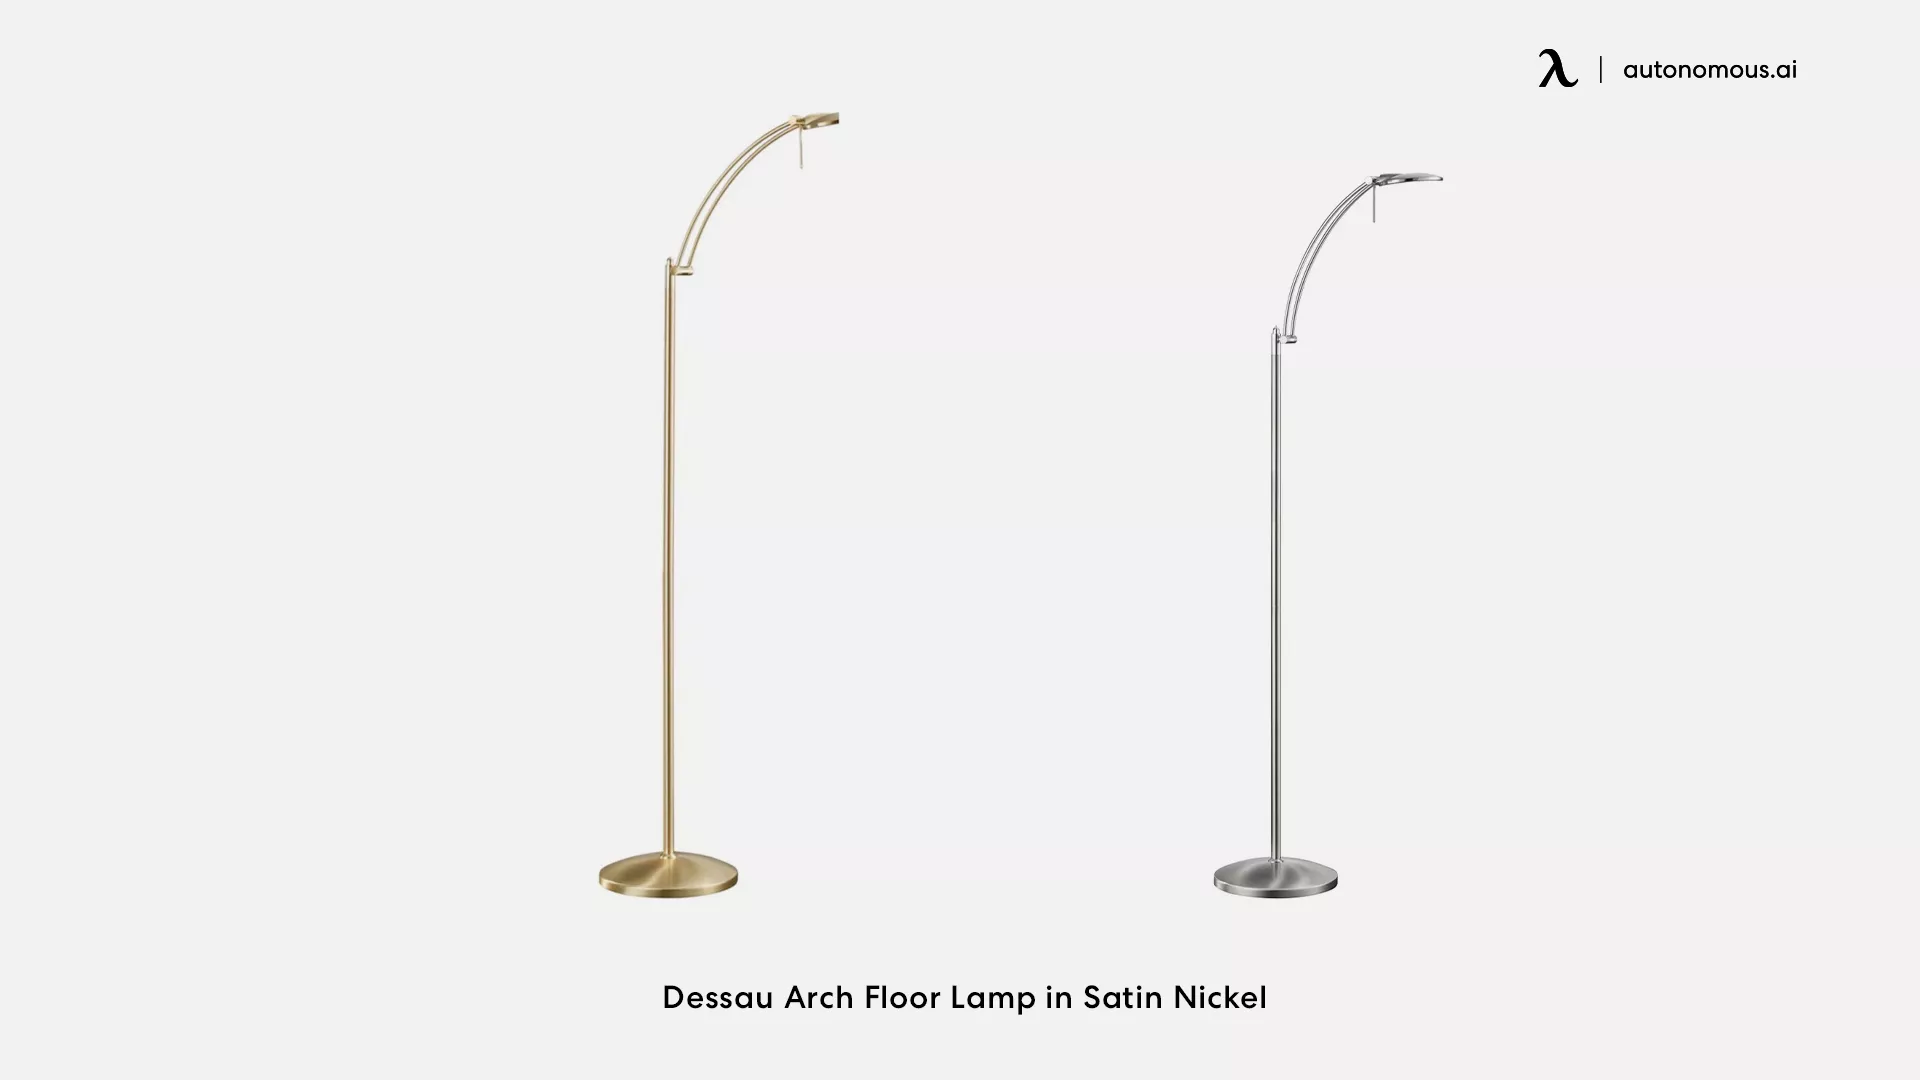 Dessau Arch Floor Lamp in Satin Nickel